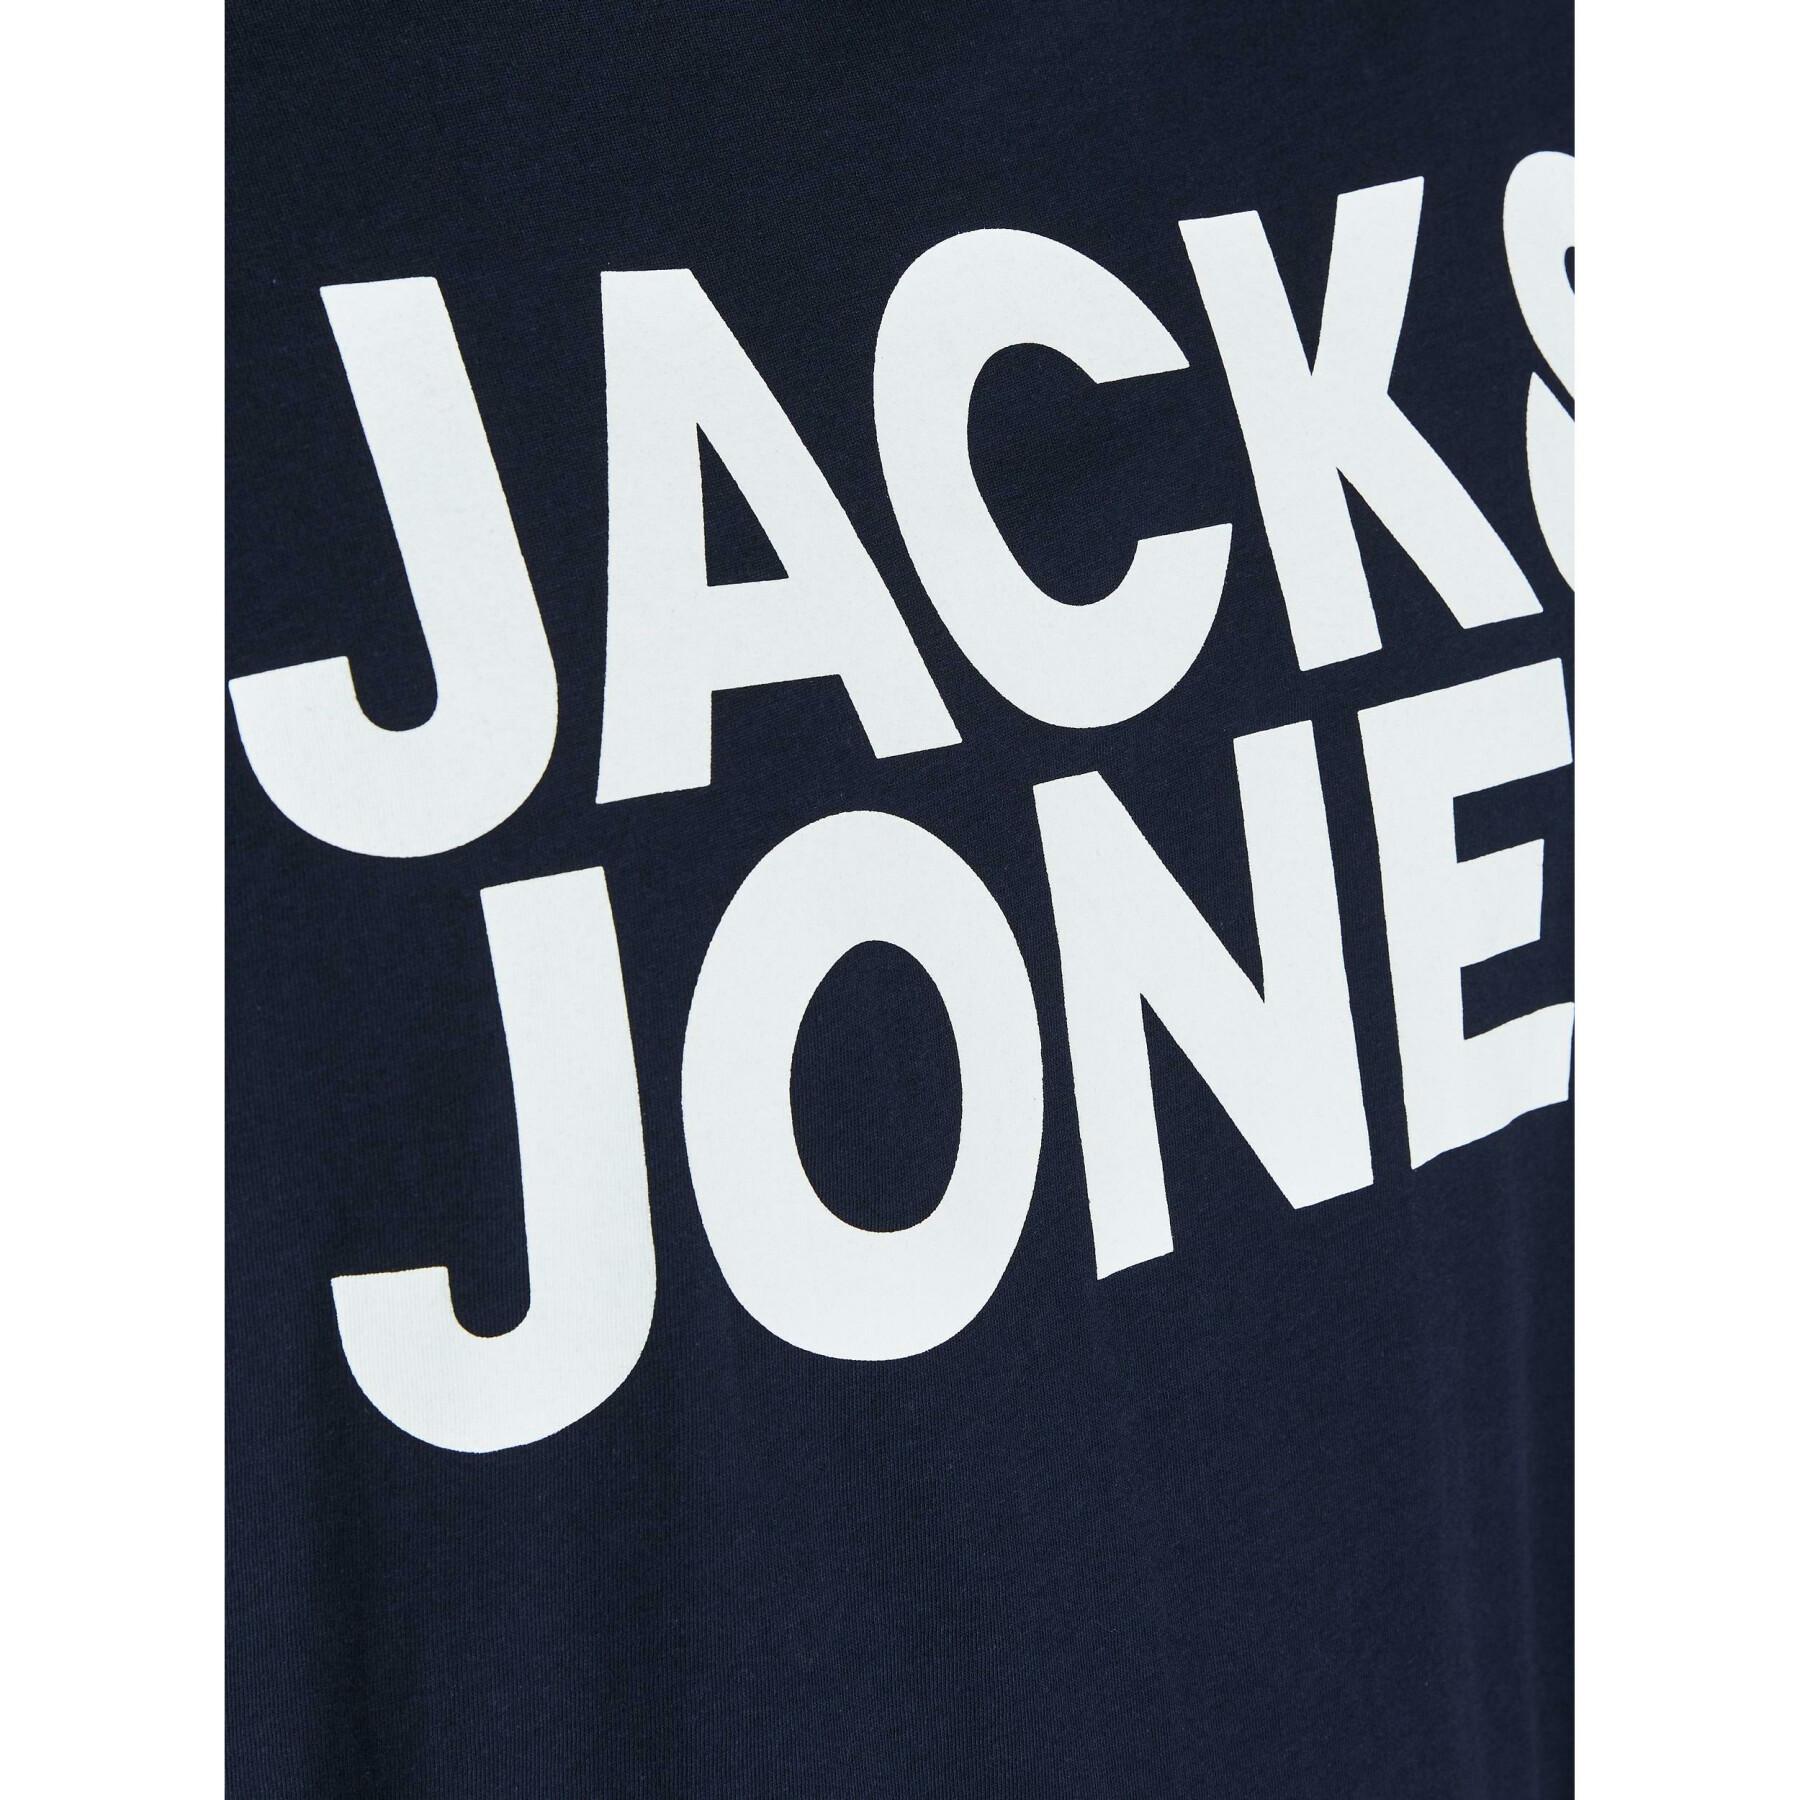 T-shirt grote maat Jack & Jones Corp Logo